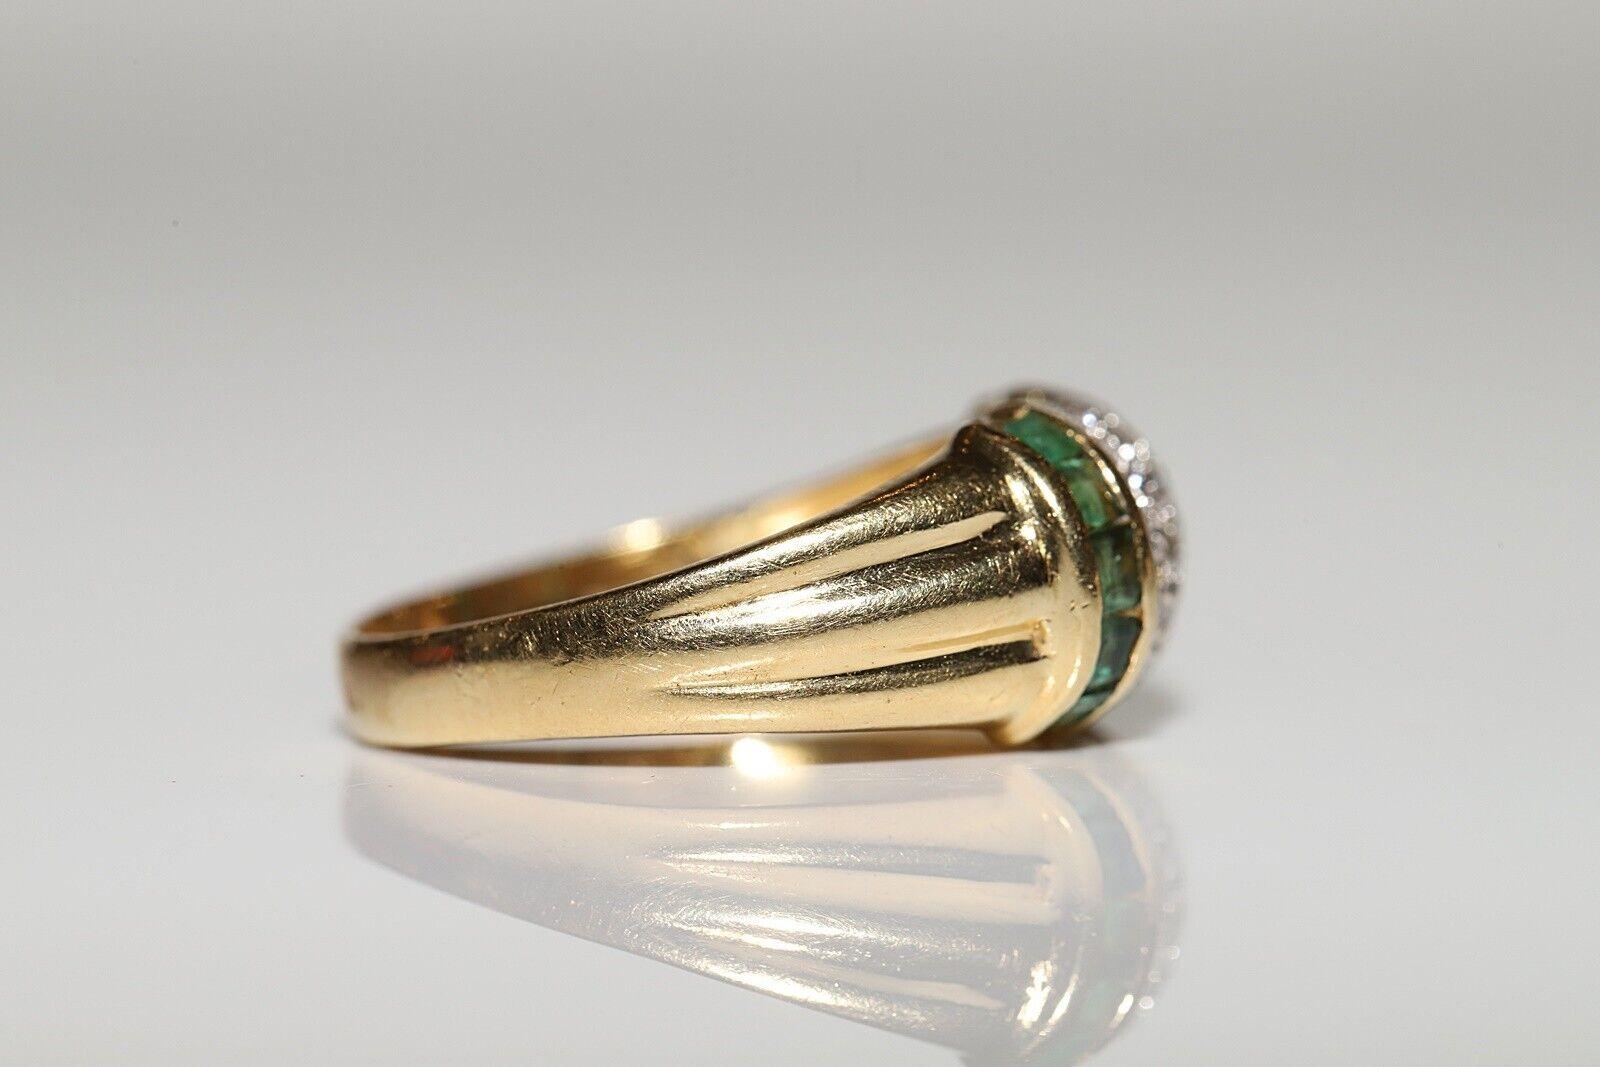 Brilliant Cut Vintage Circa 1970s 18k Gold Natural Diamond And Caliber Emerald Ring For Sale